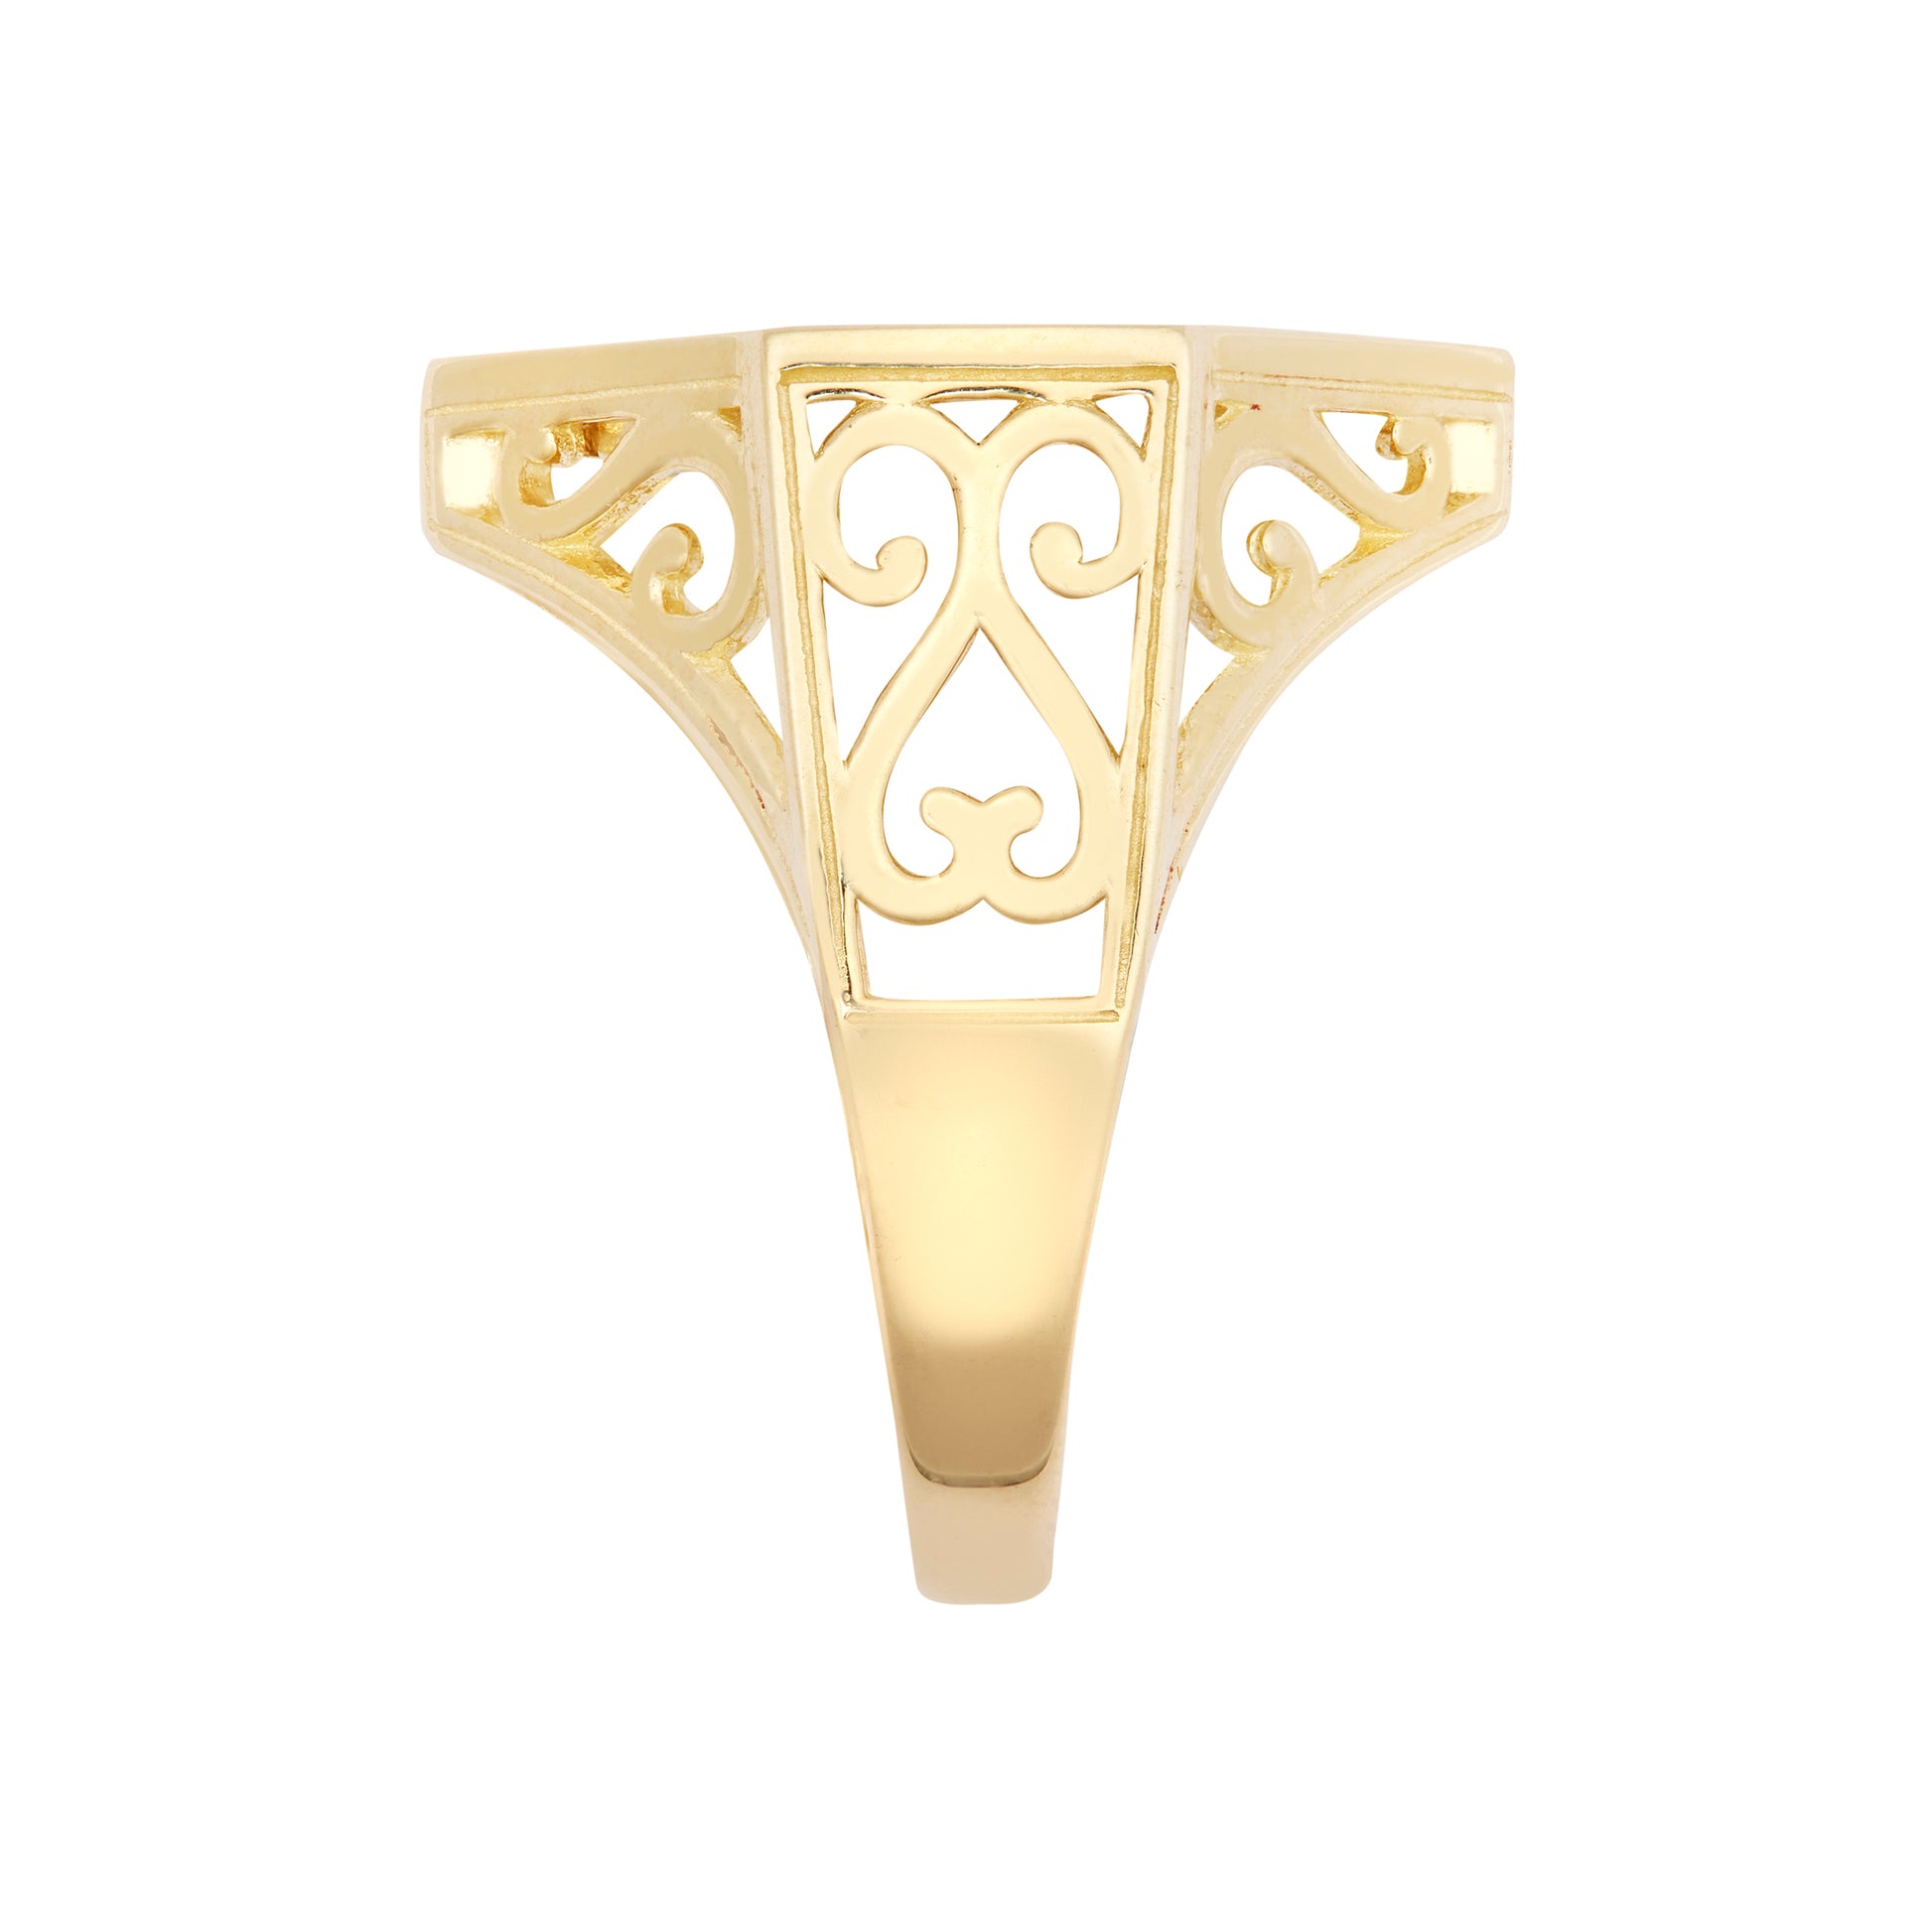 9ct Gold  Octagon Scroll St George Ring (Half Sov Size) - JRN179-H